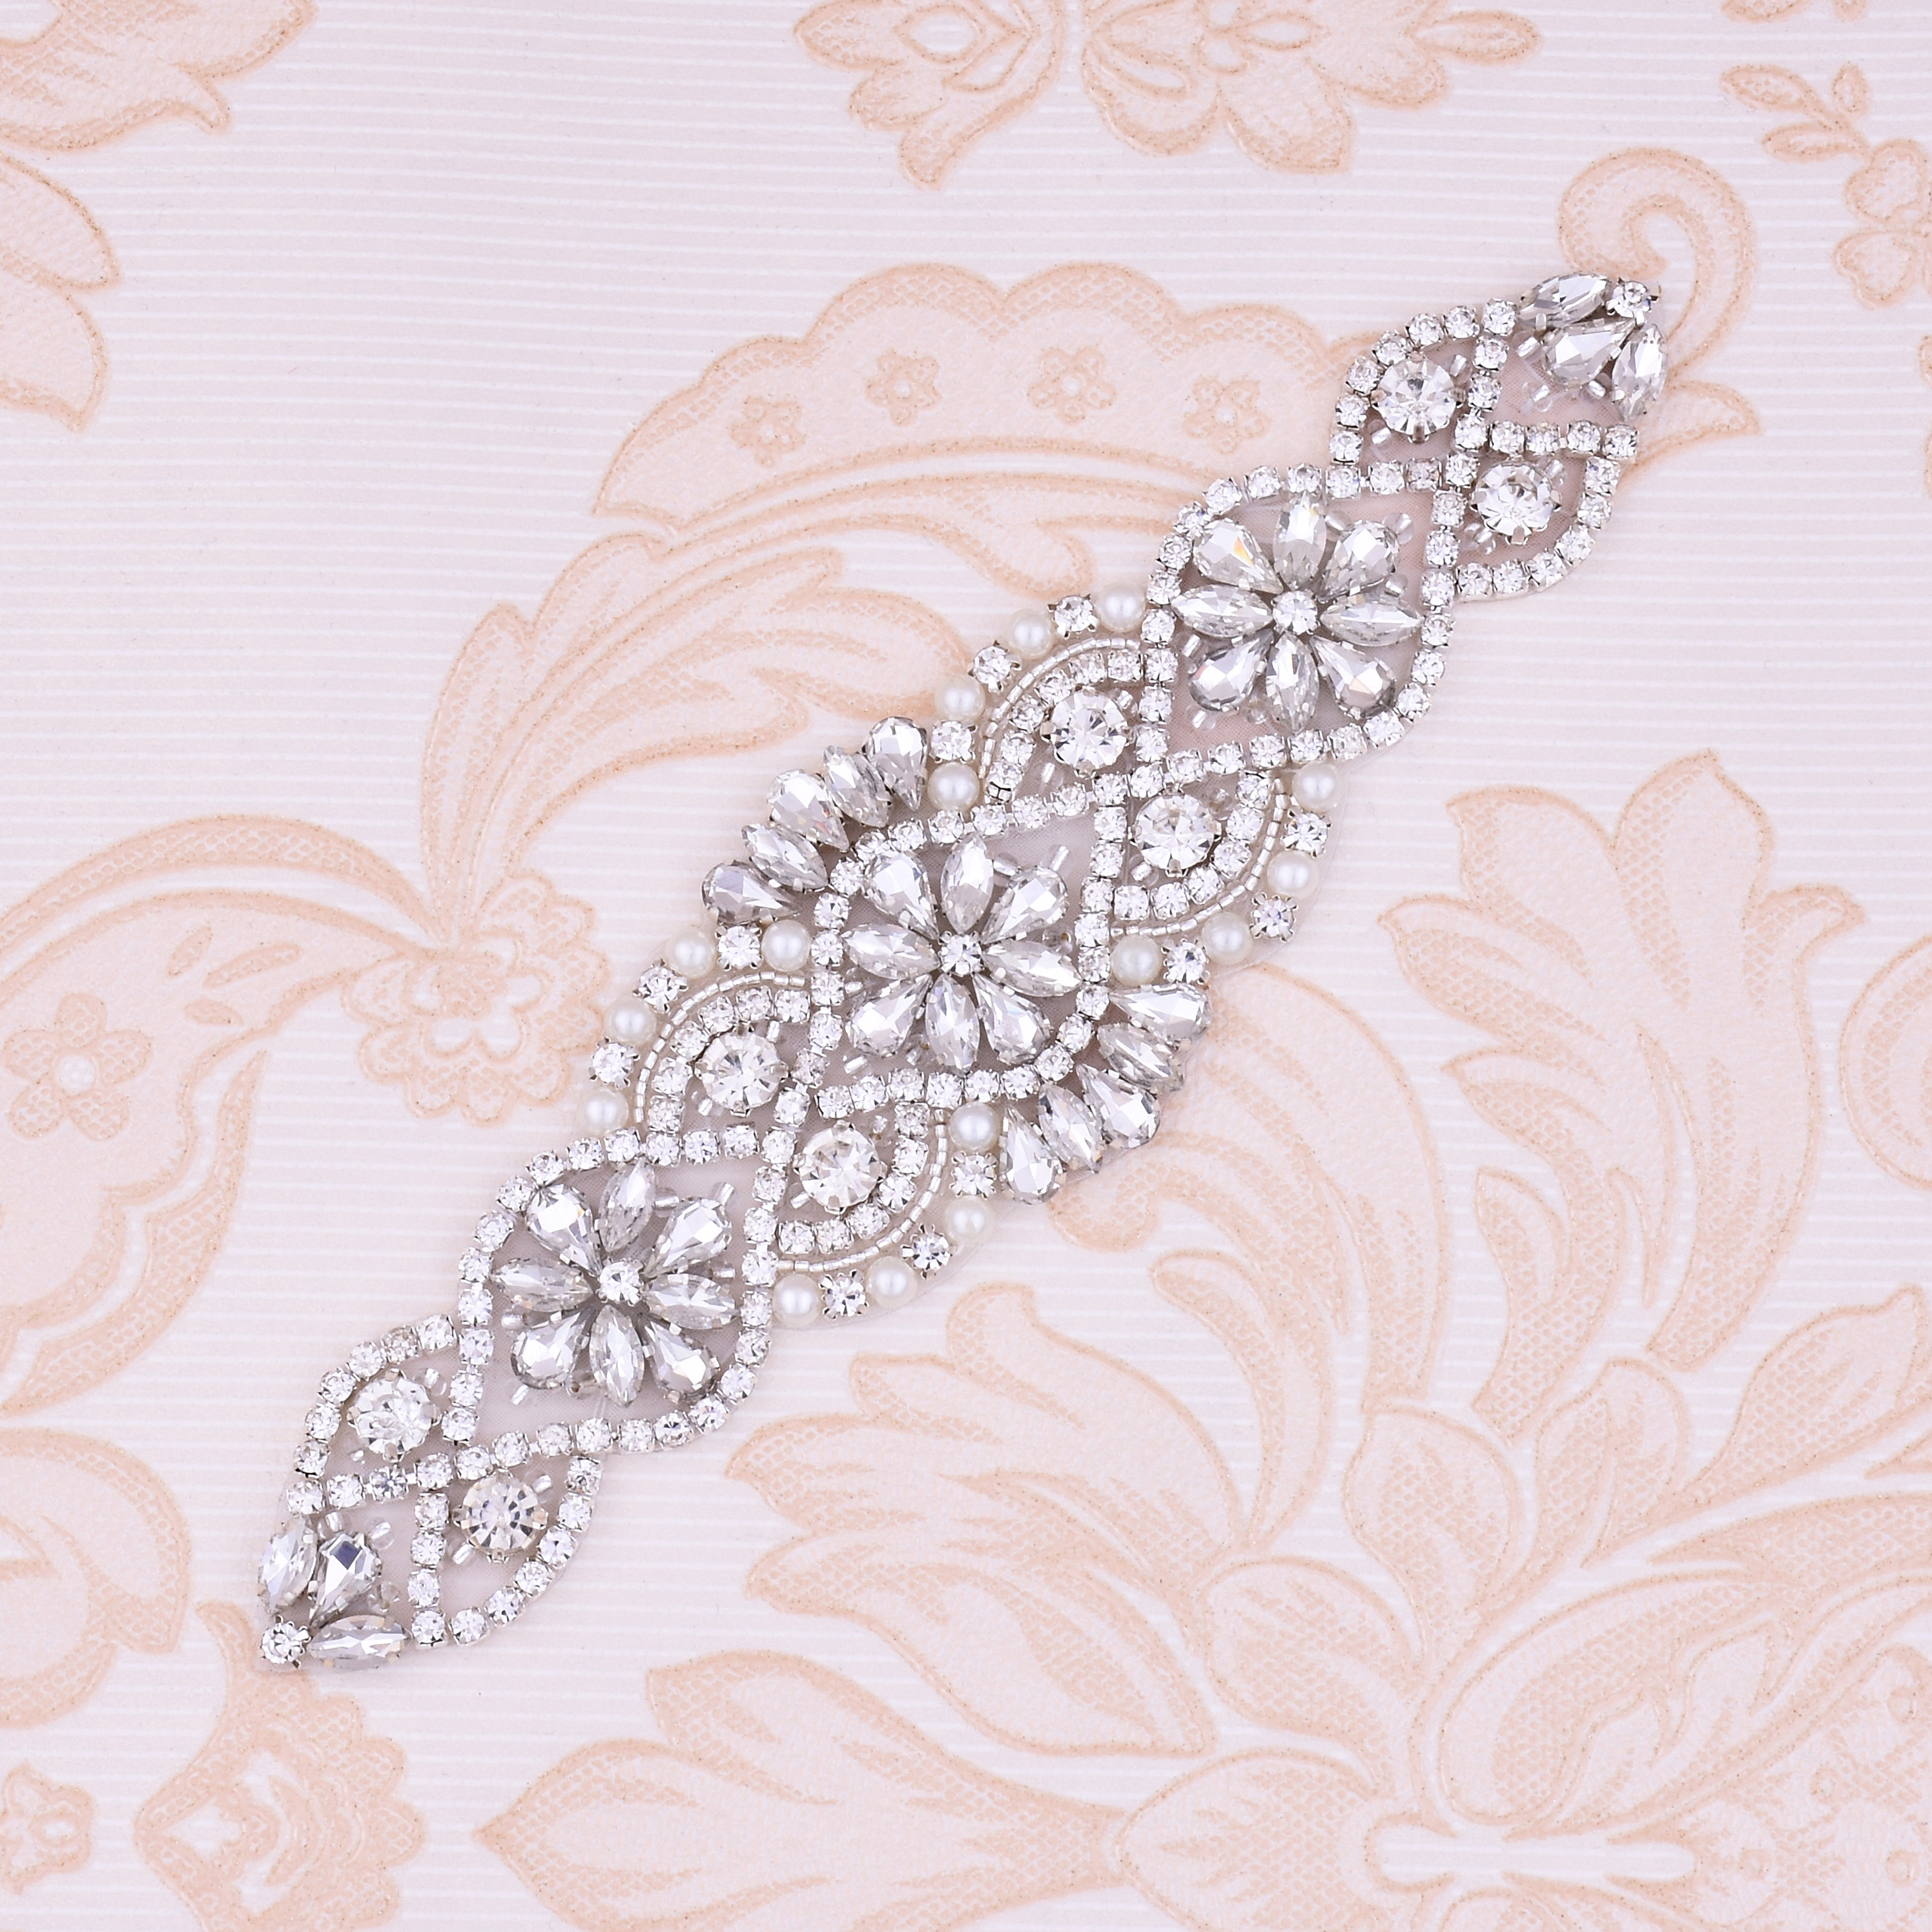 Luxury Silver Crystal Wedding Belts Ceintures De Mariage Rhinestone Applique Female belts for Bridal Accessories 2020